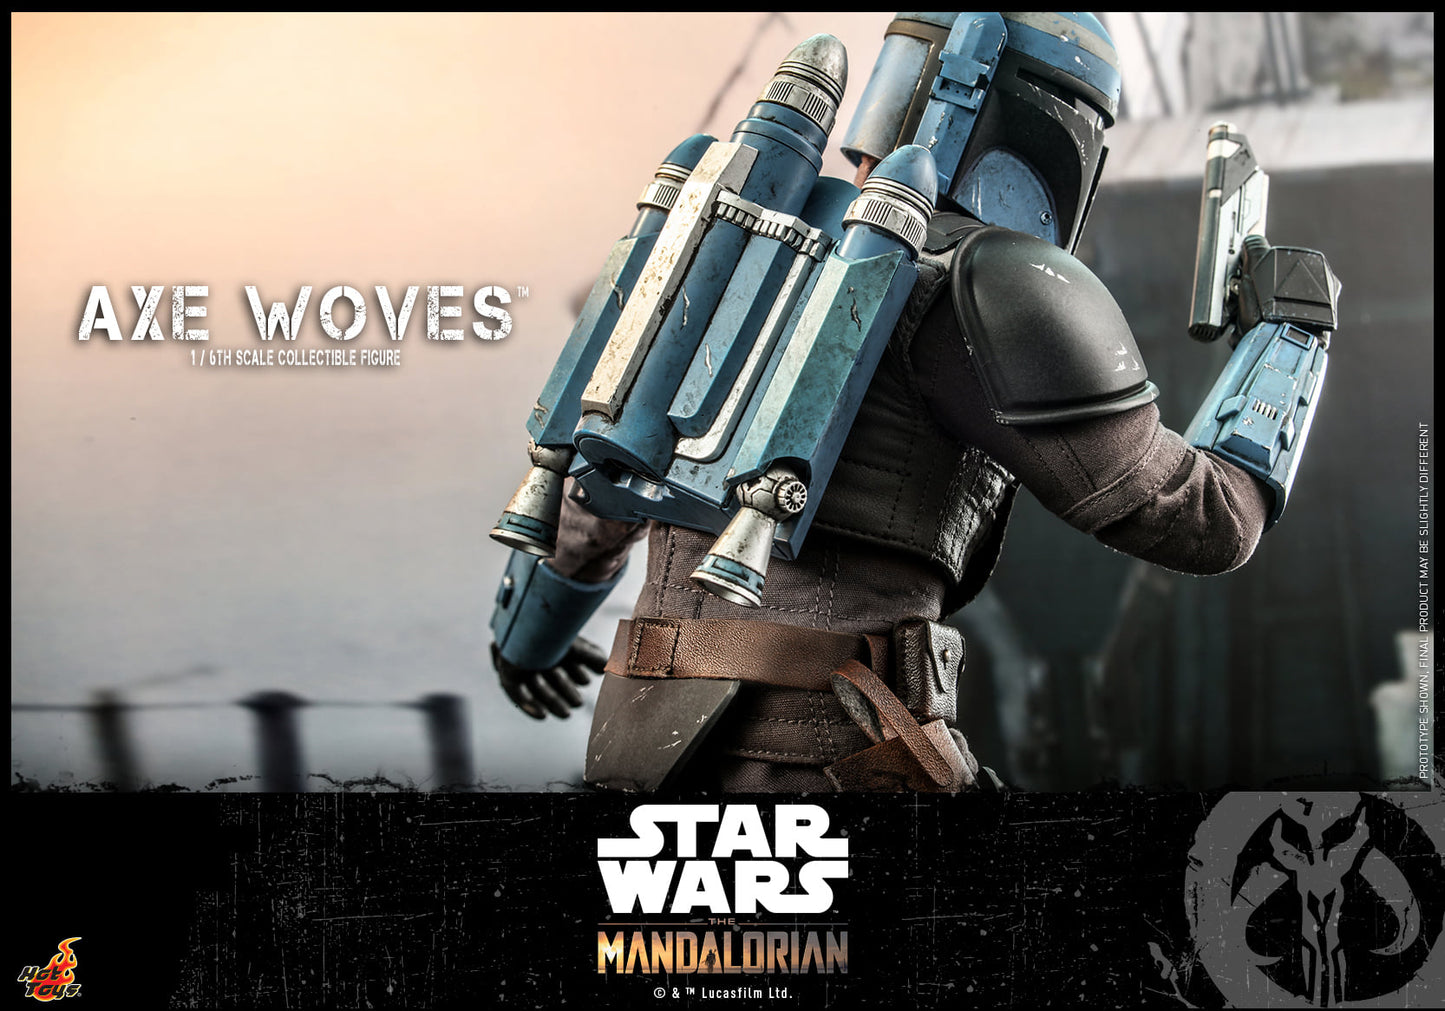 Hot Toys TMS070 1/6 Star Wars: The Mandalorian - Ax Woves